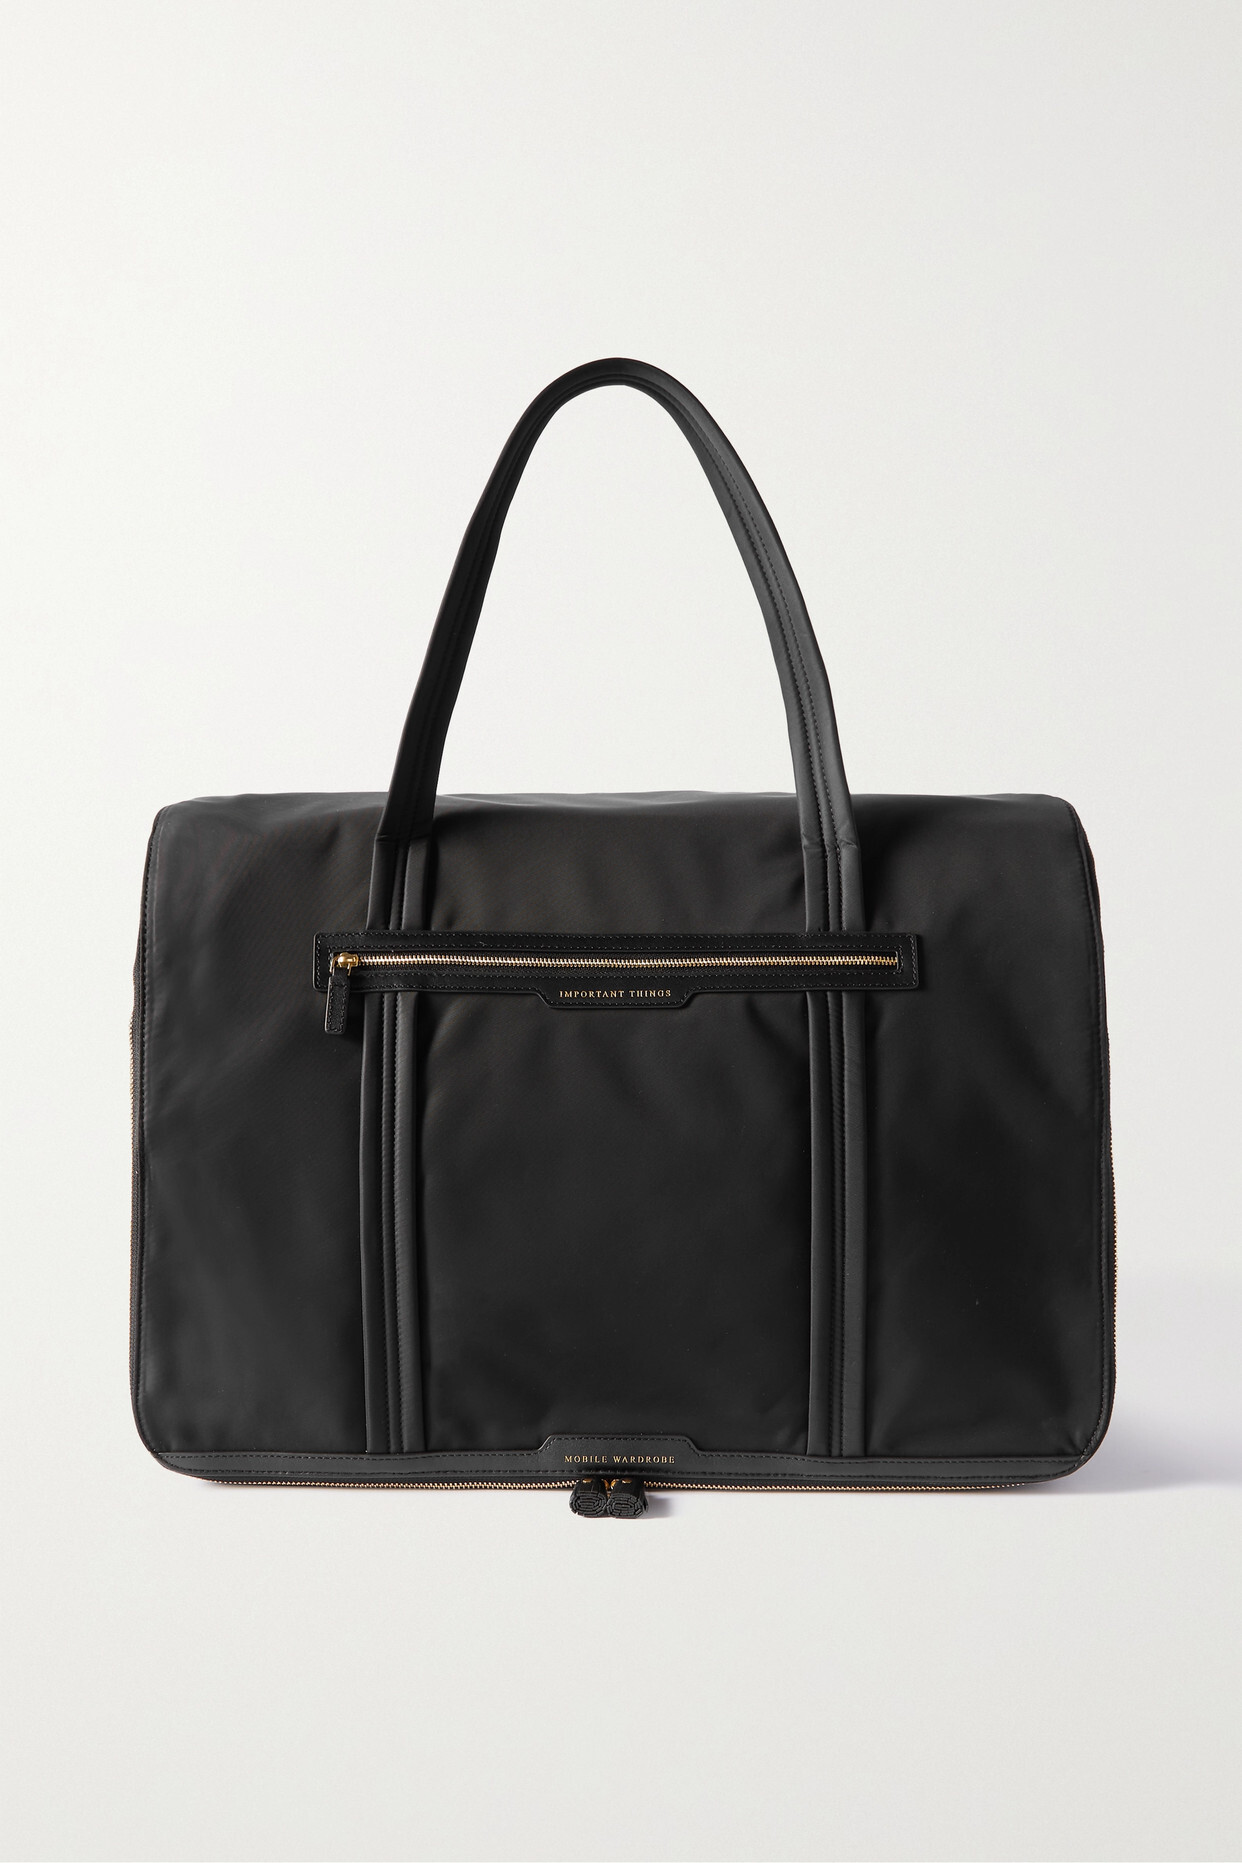 Anya Hindmarch - Mobile Wardrobe Leather-trimmed Econyl Weekend Bag - Black